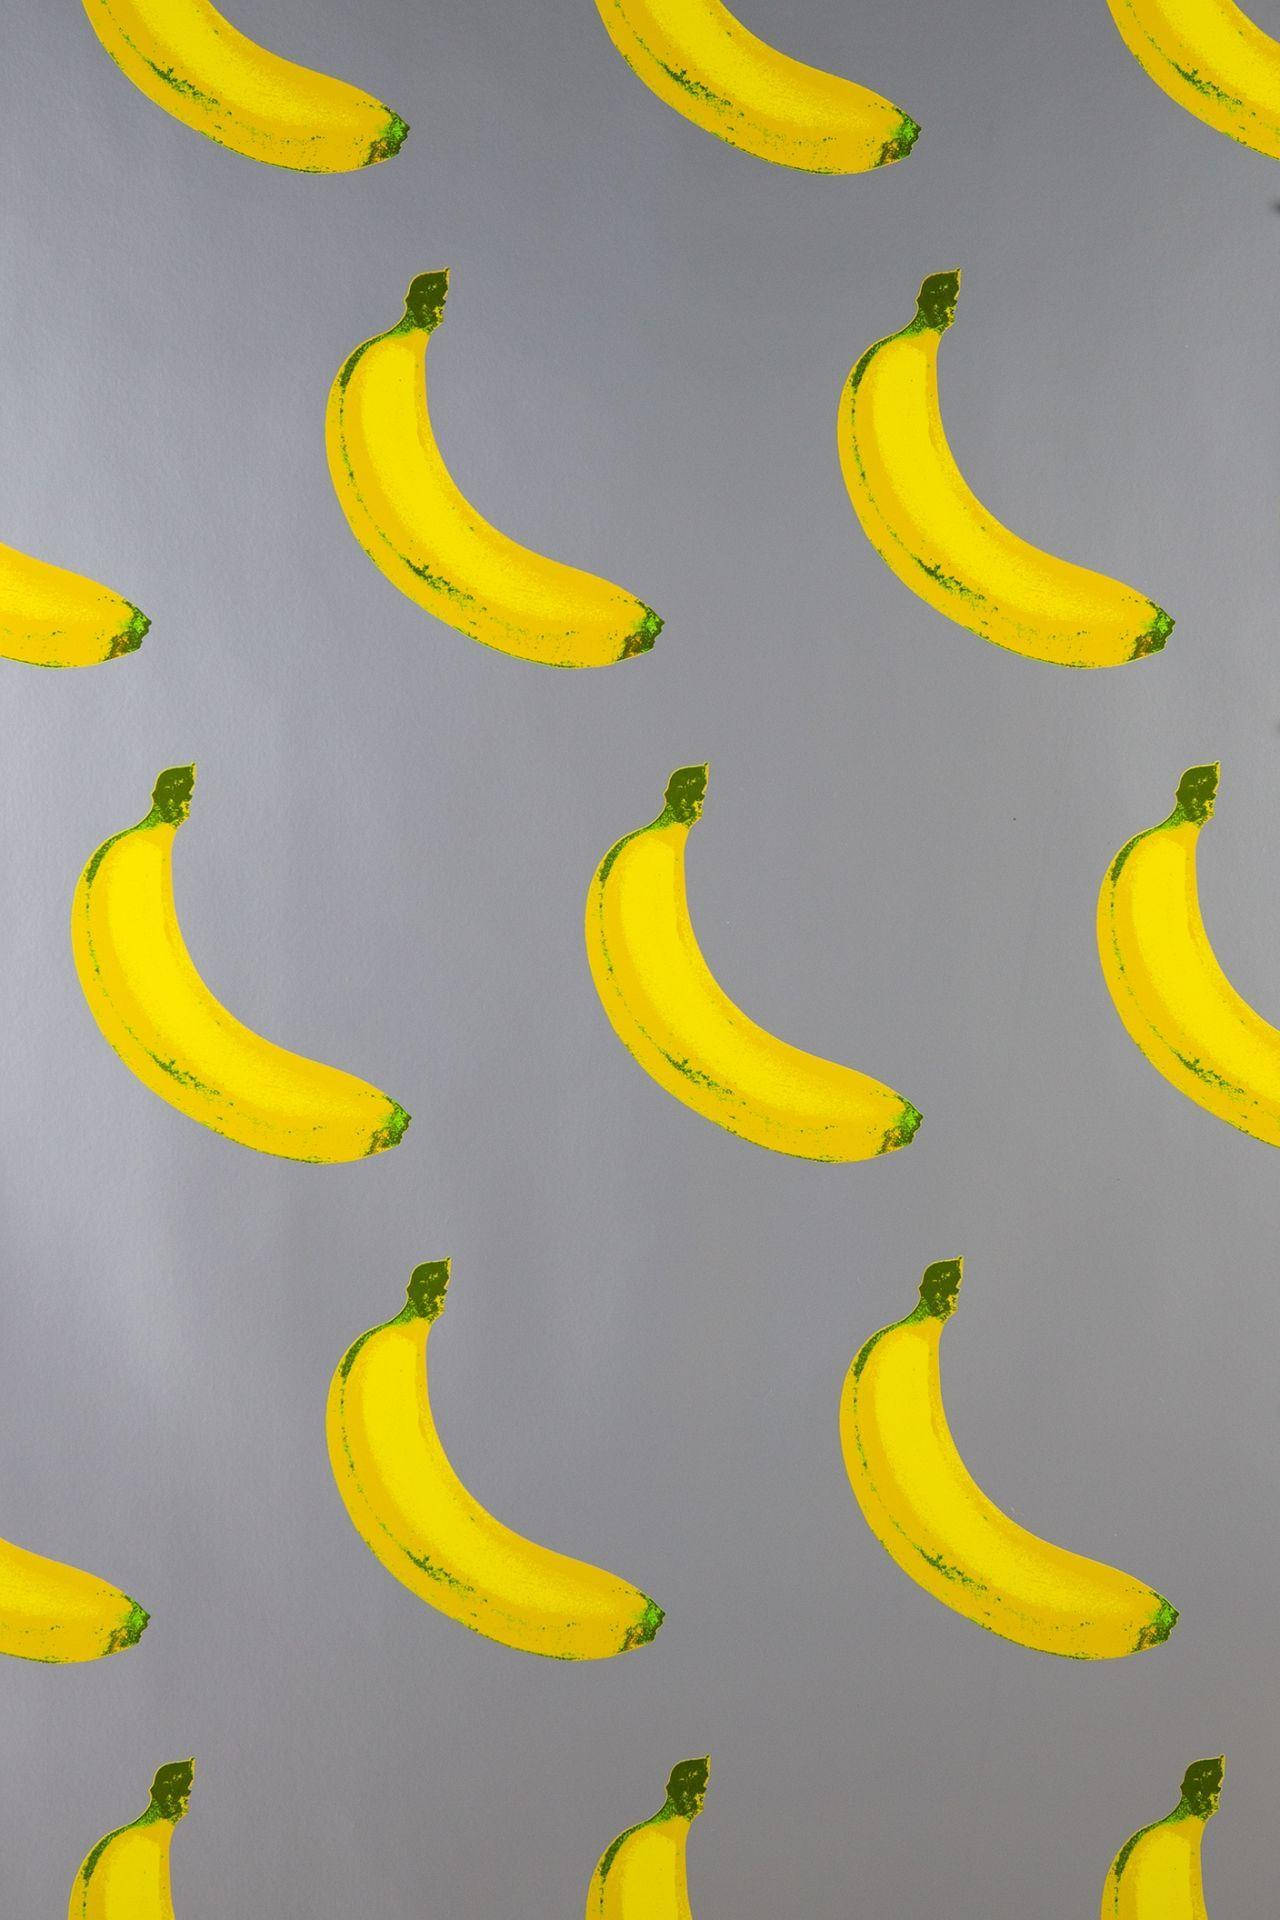 Banana 1280X1920 Wallpaper and Background Image